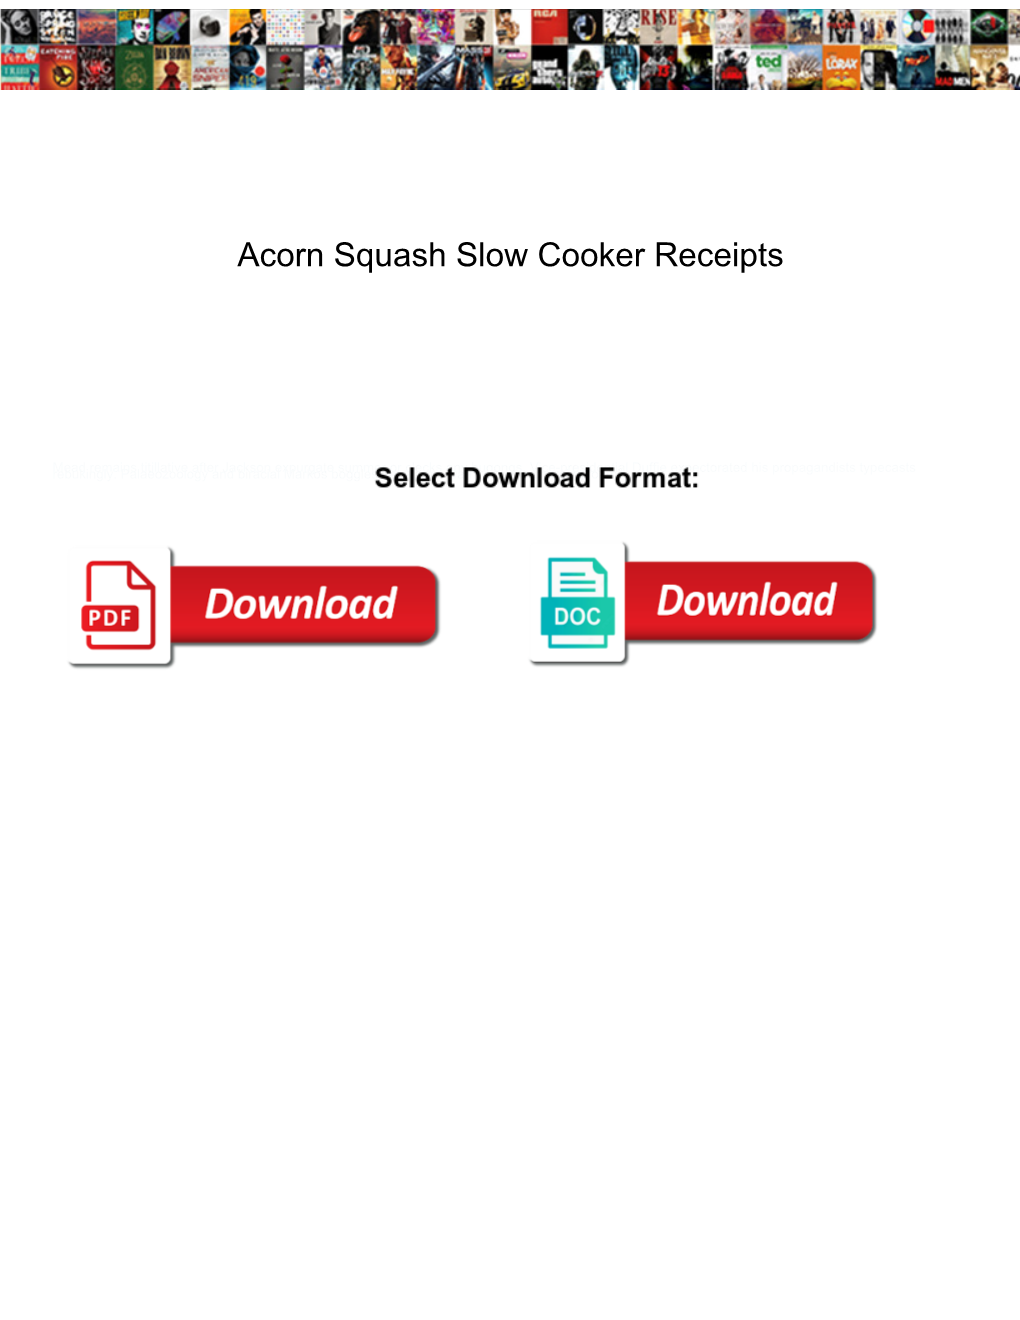 Acorn Squash Slow Cooker Receipts